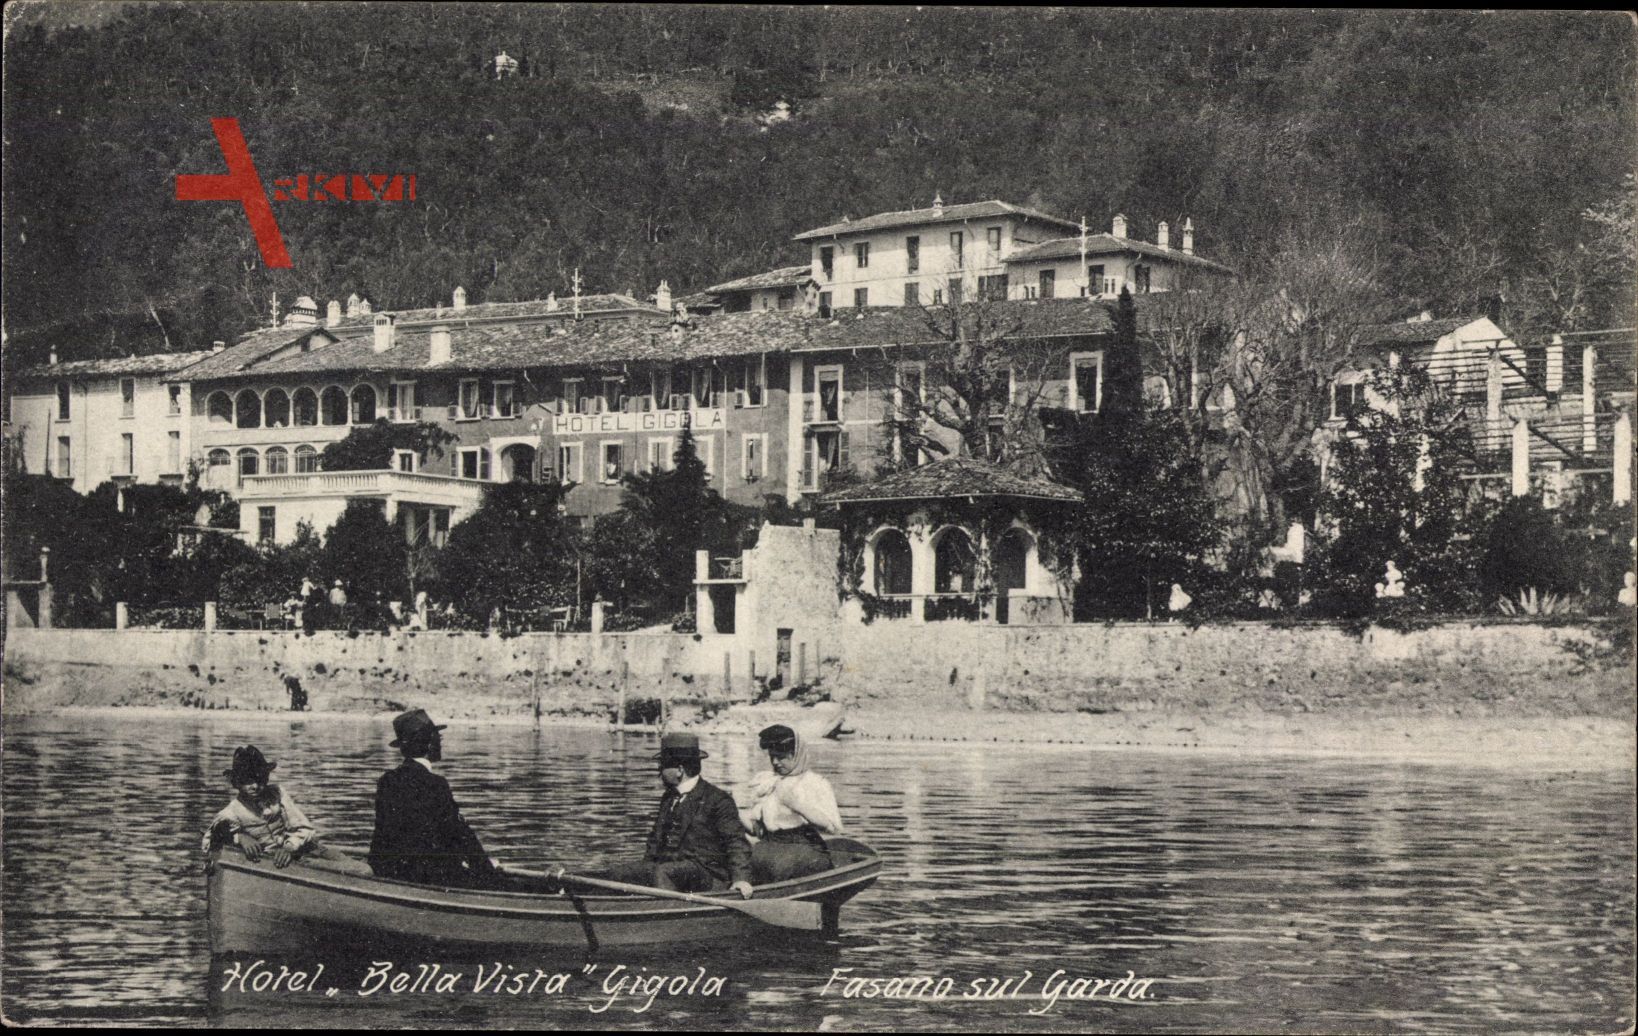 Gardone Riviera Lombardia, Hotel Bella Vista Gigola, Fasano sul Garda